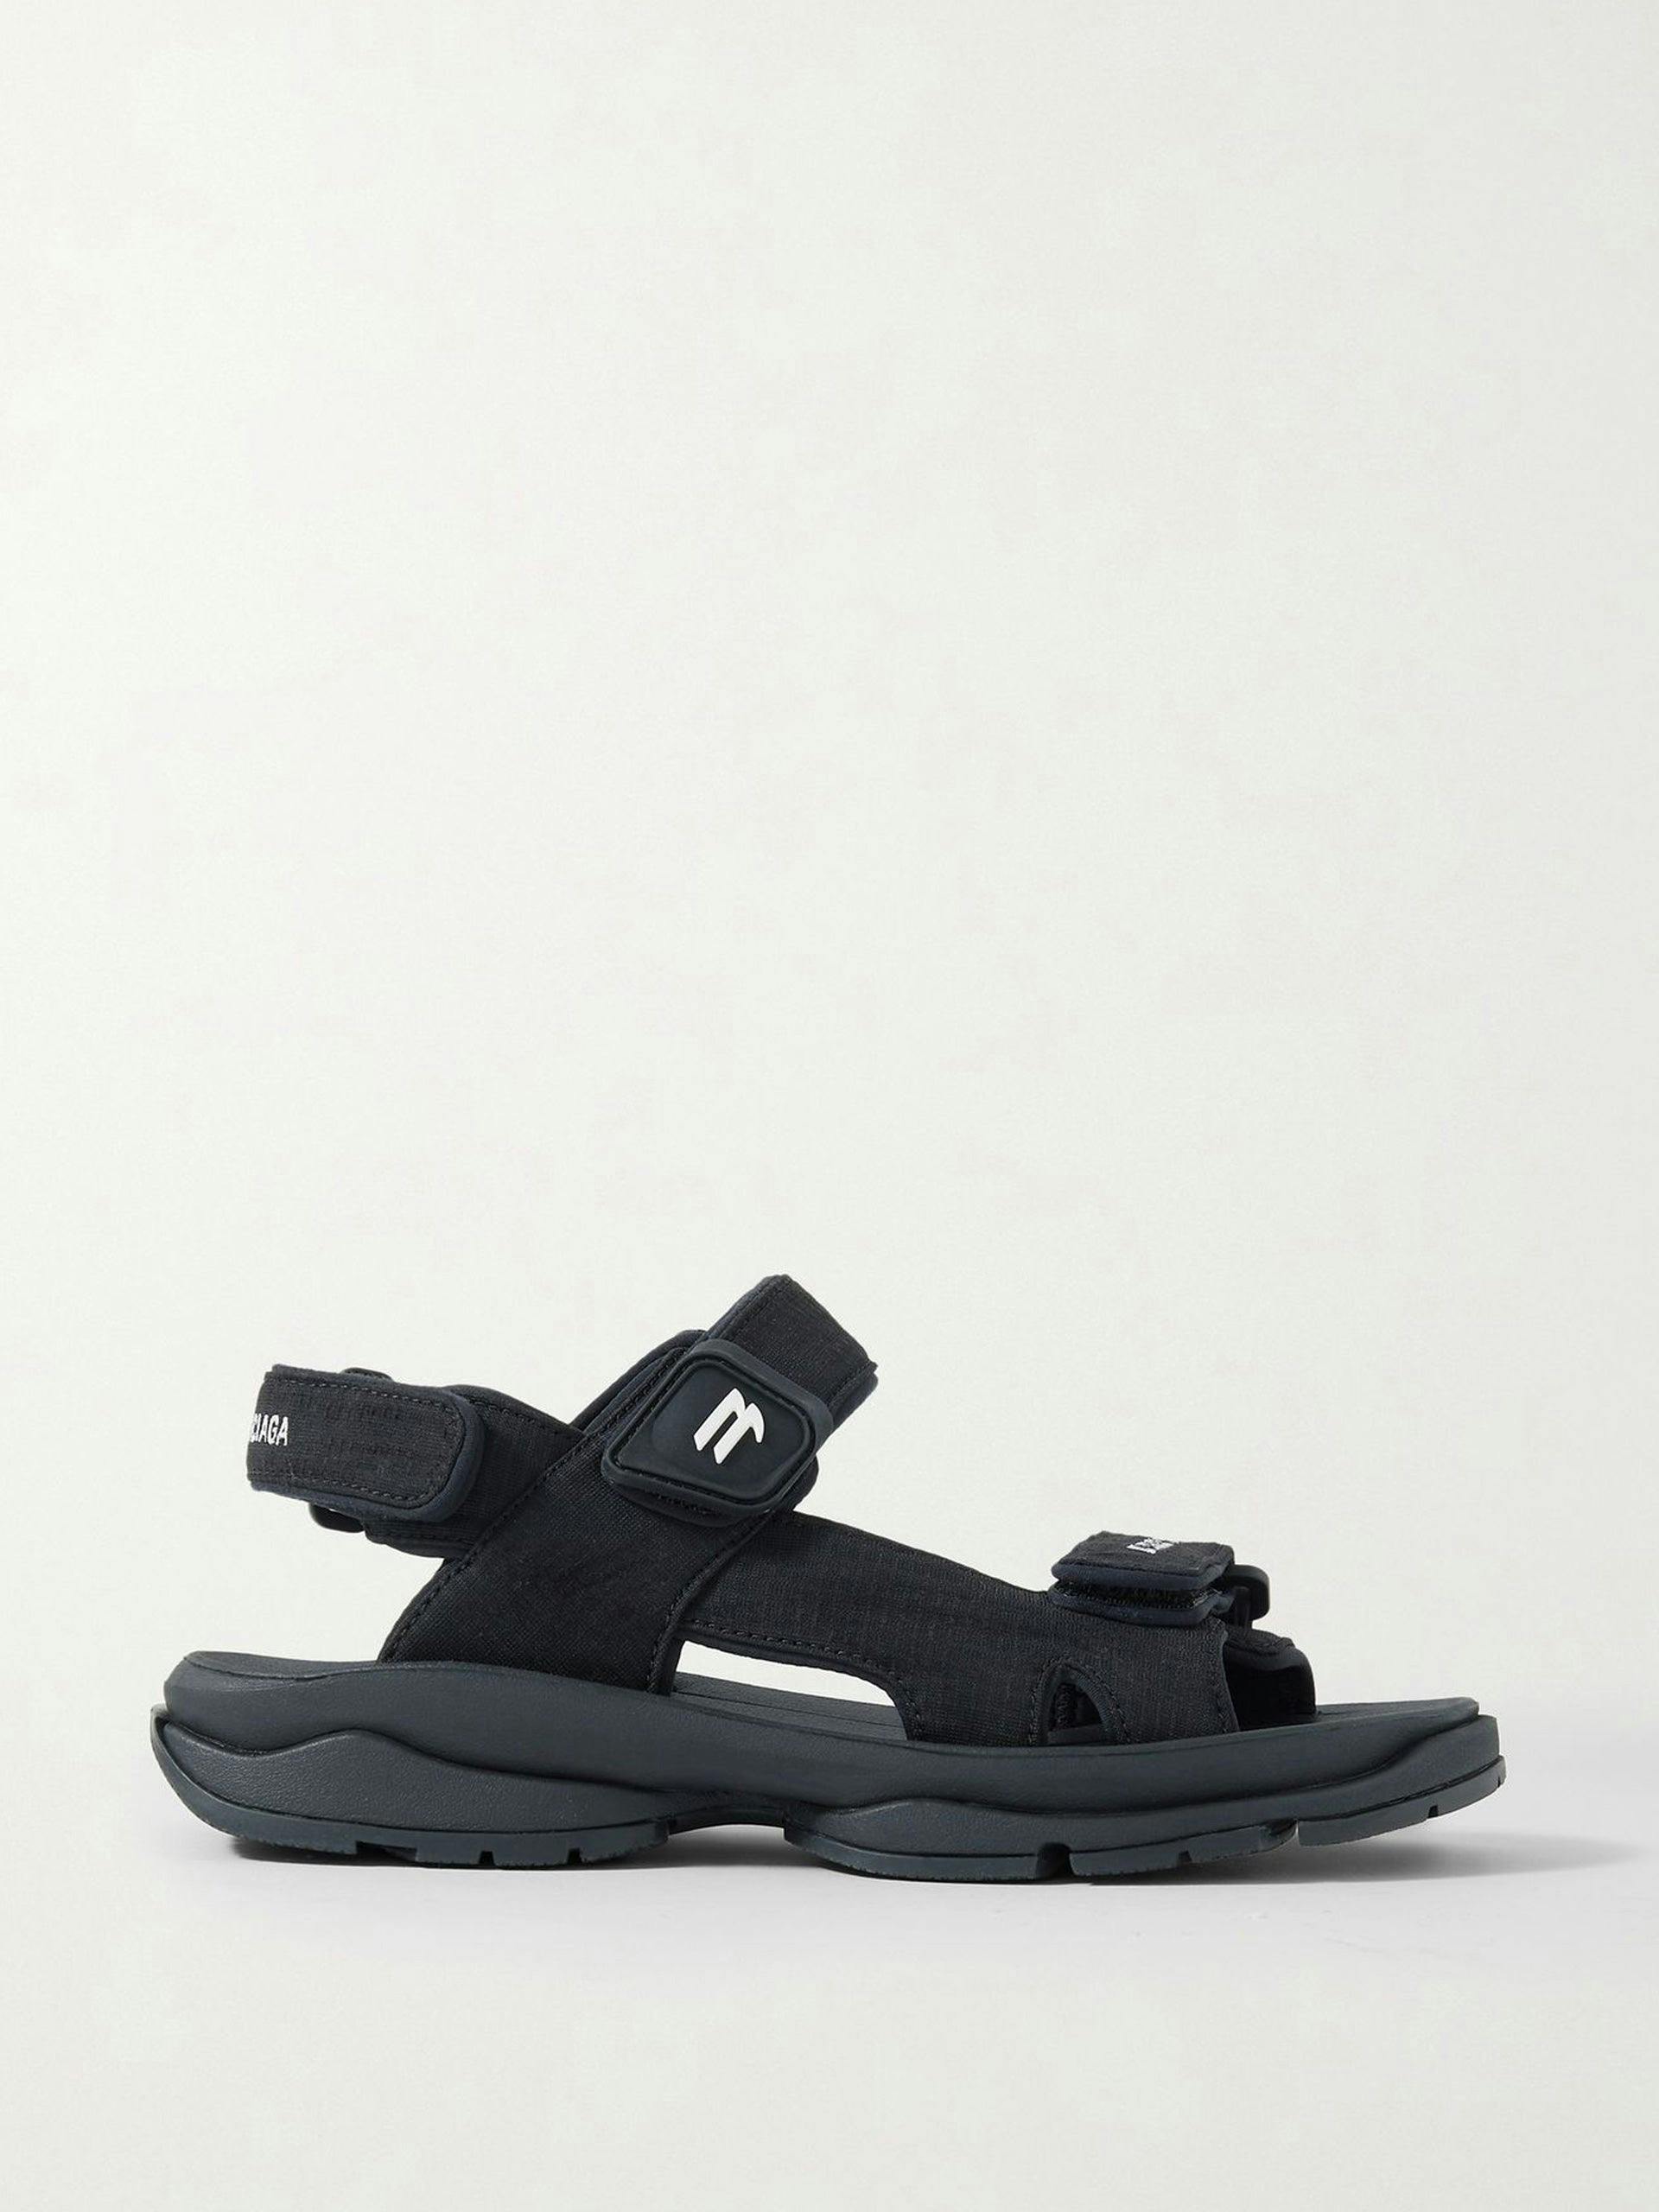 Chunky black velcro sandals